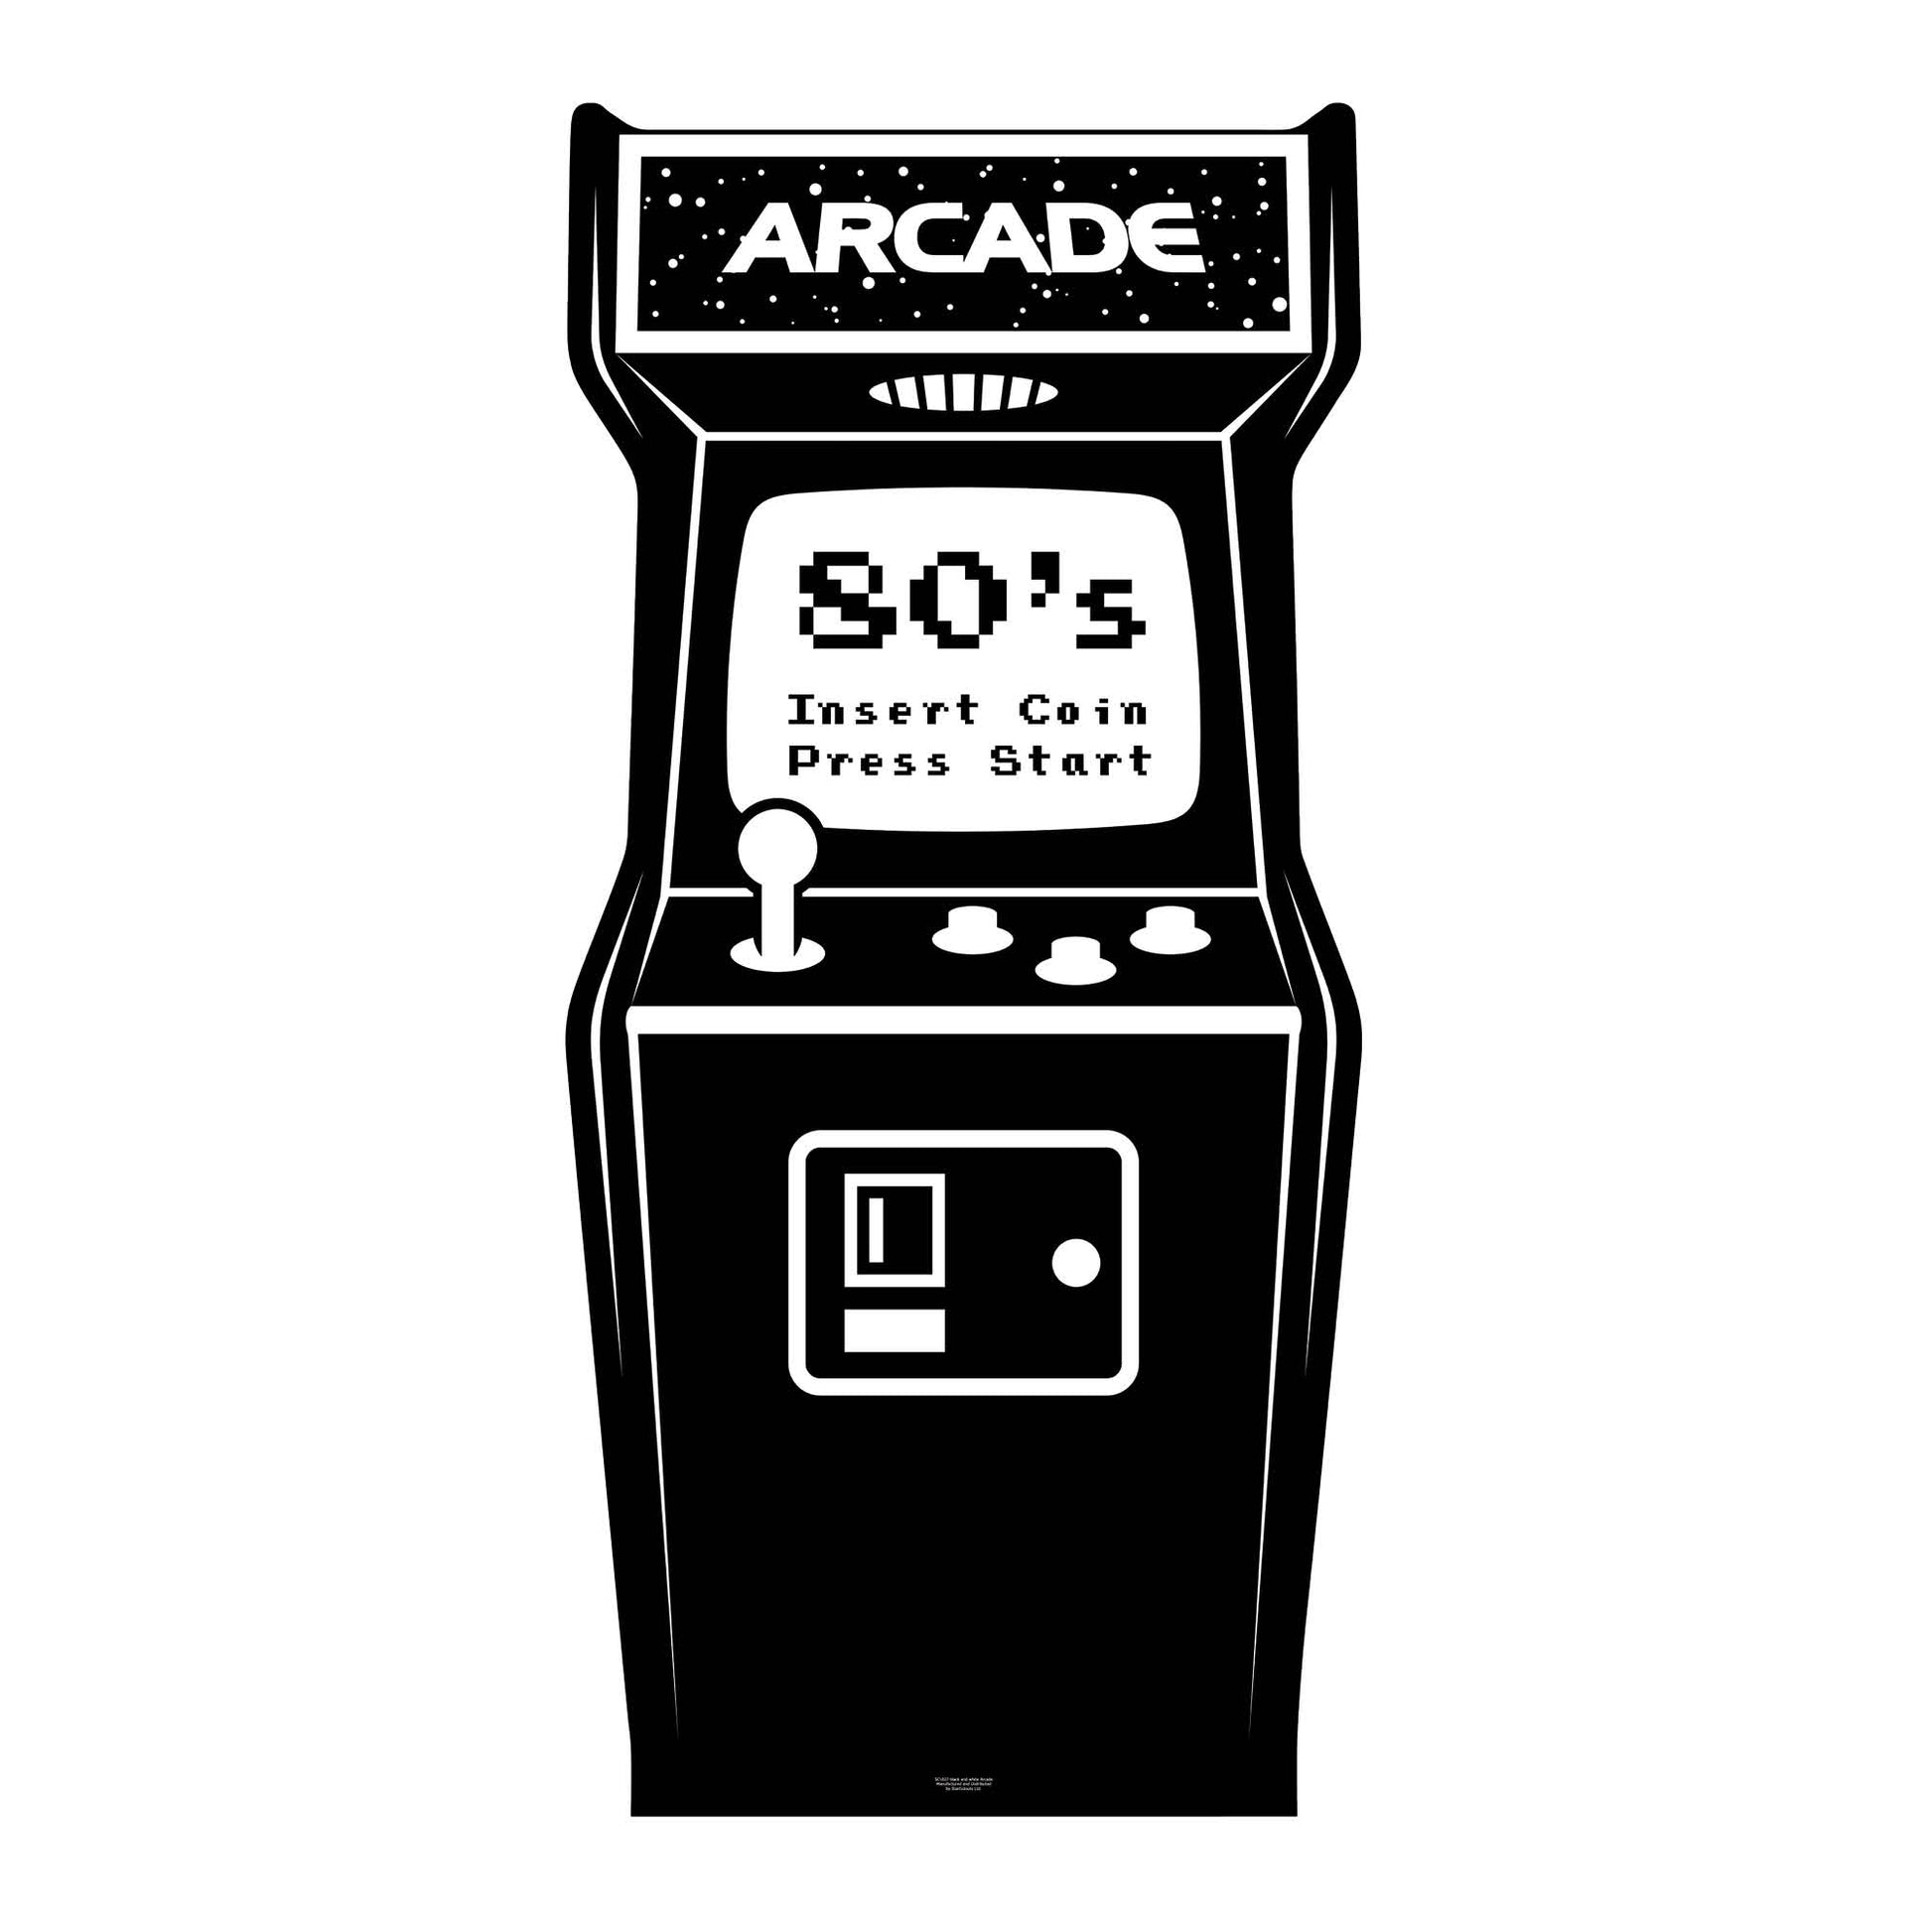 Black and White Arcade Cardboard Cutout